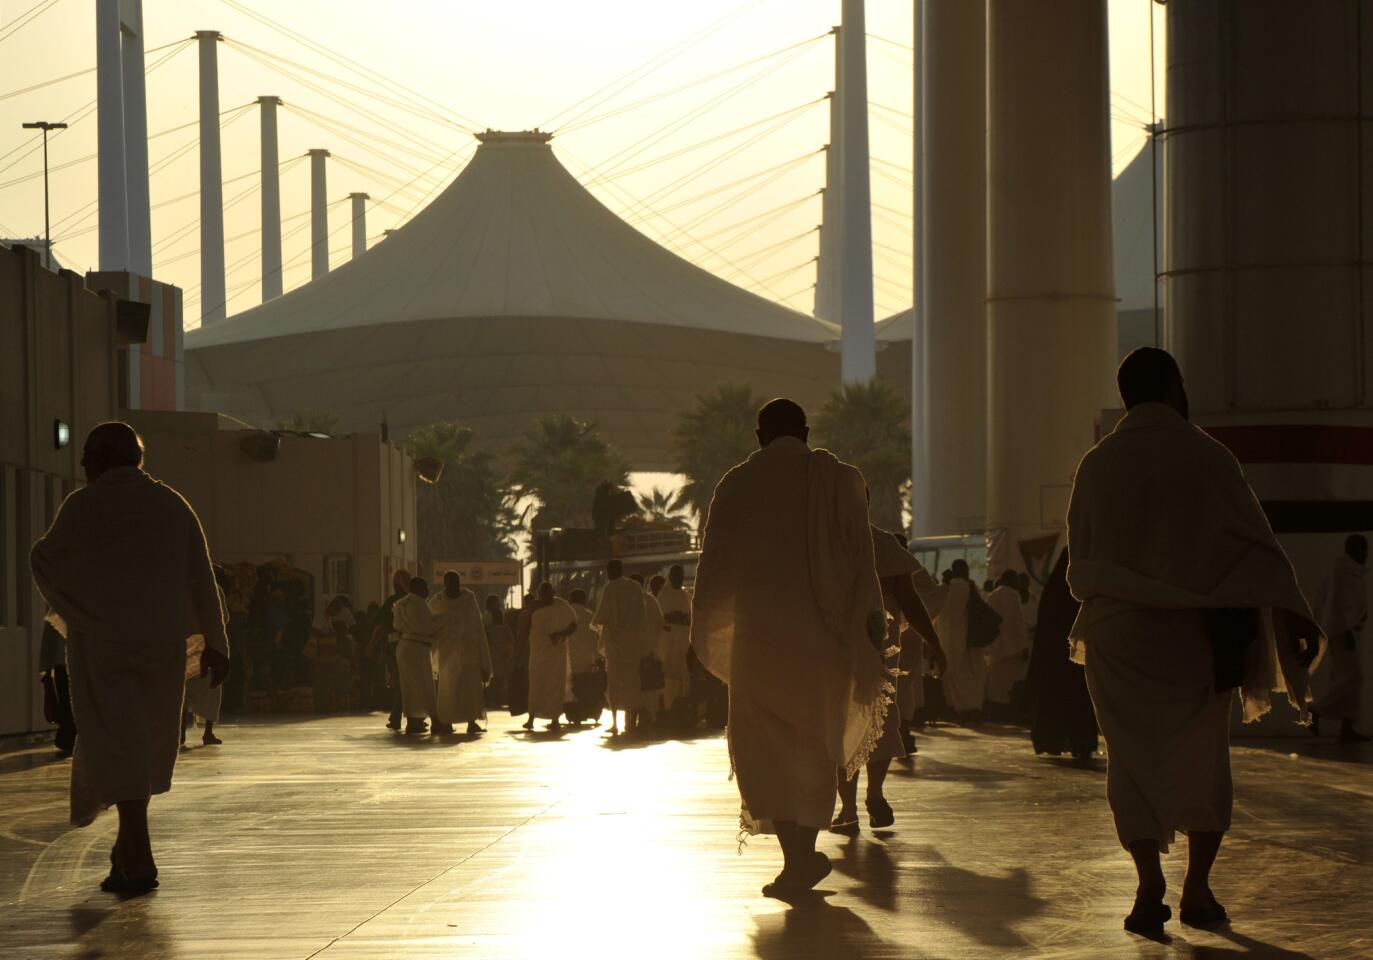 1. Jeddah King Abdulaziz International Airport in Saudi Arabia (JED)